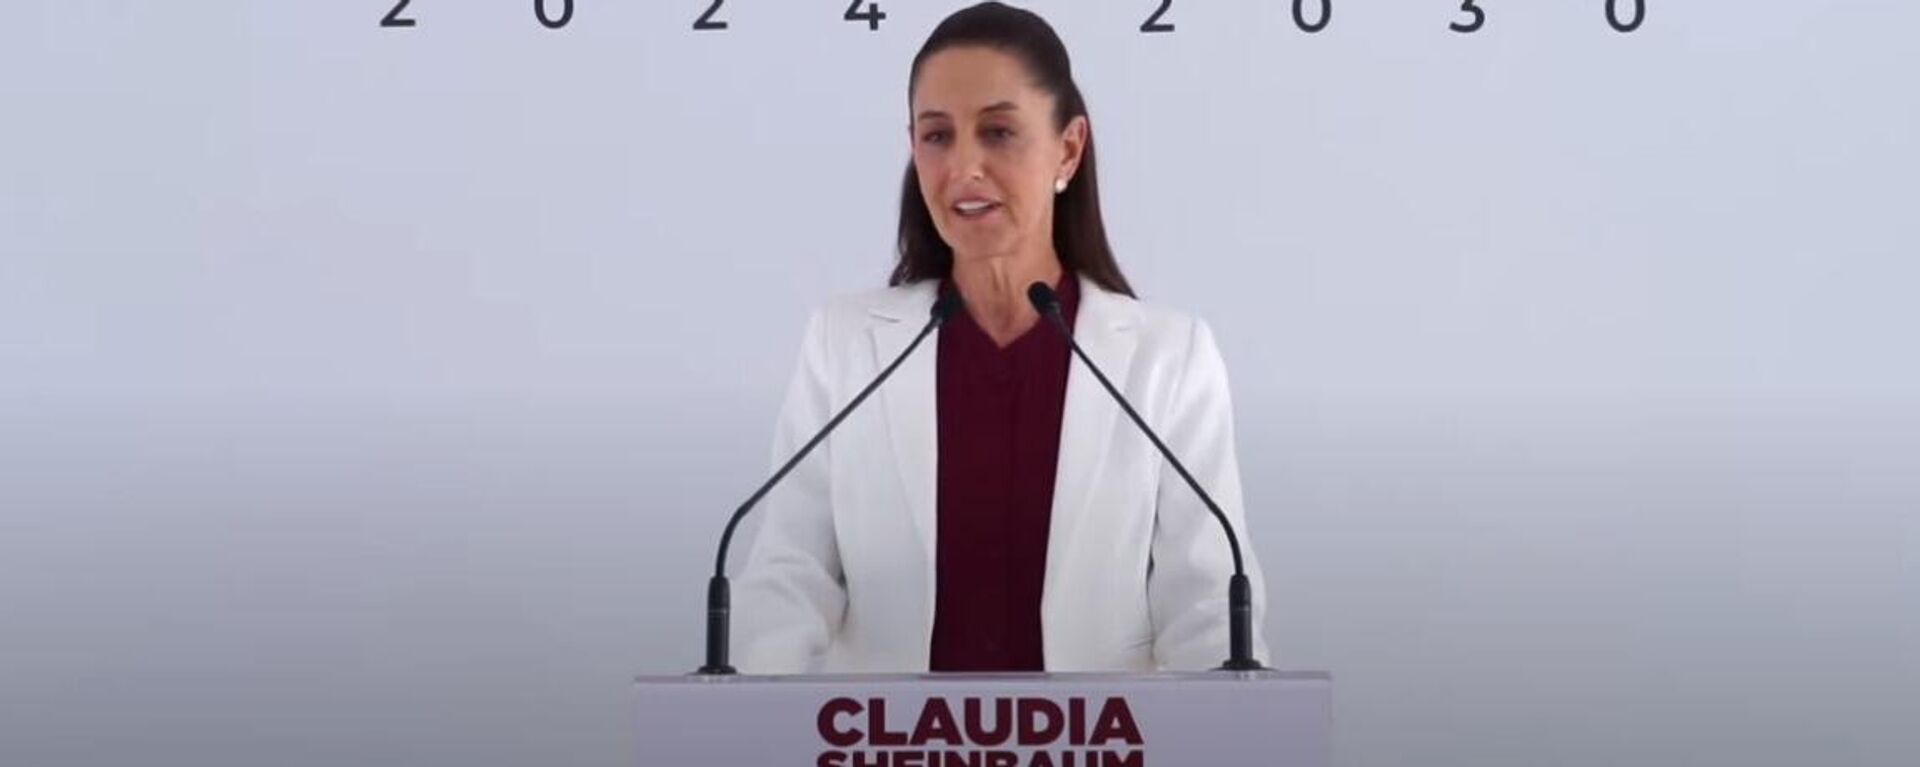 La presidenta virtual electa de México, Claudia Sheinbaum. - Sputnik Mundo, 1920, 17.06.2024